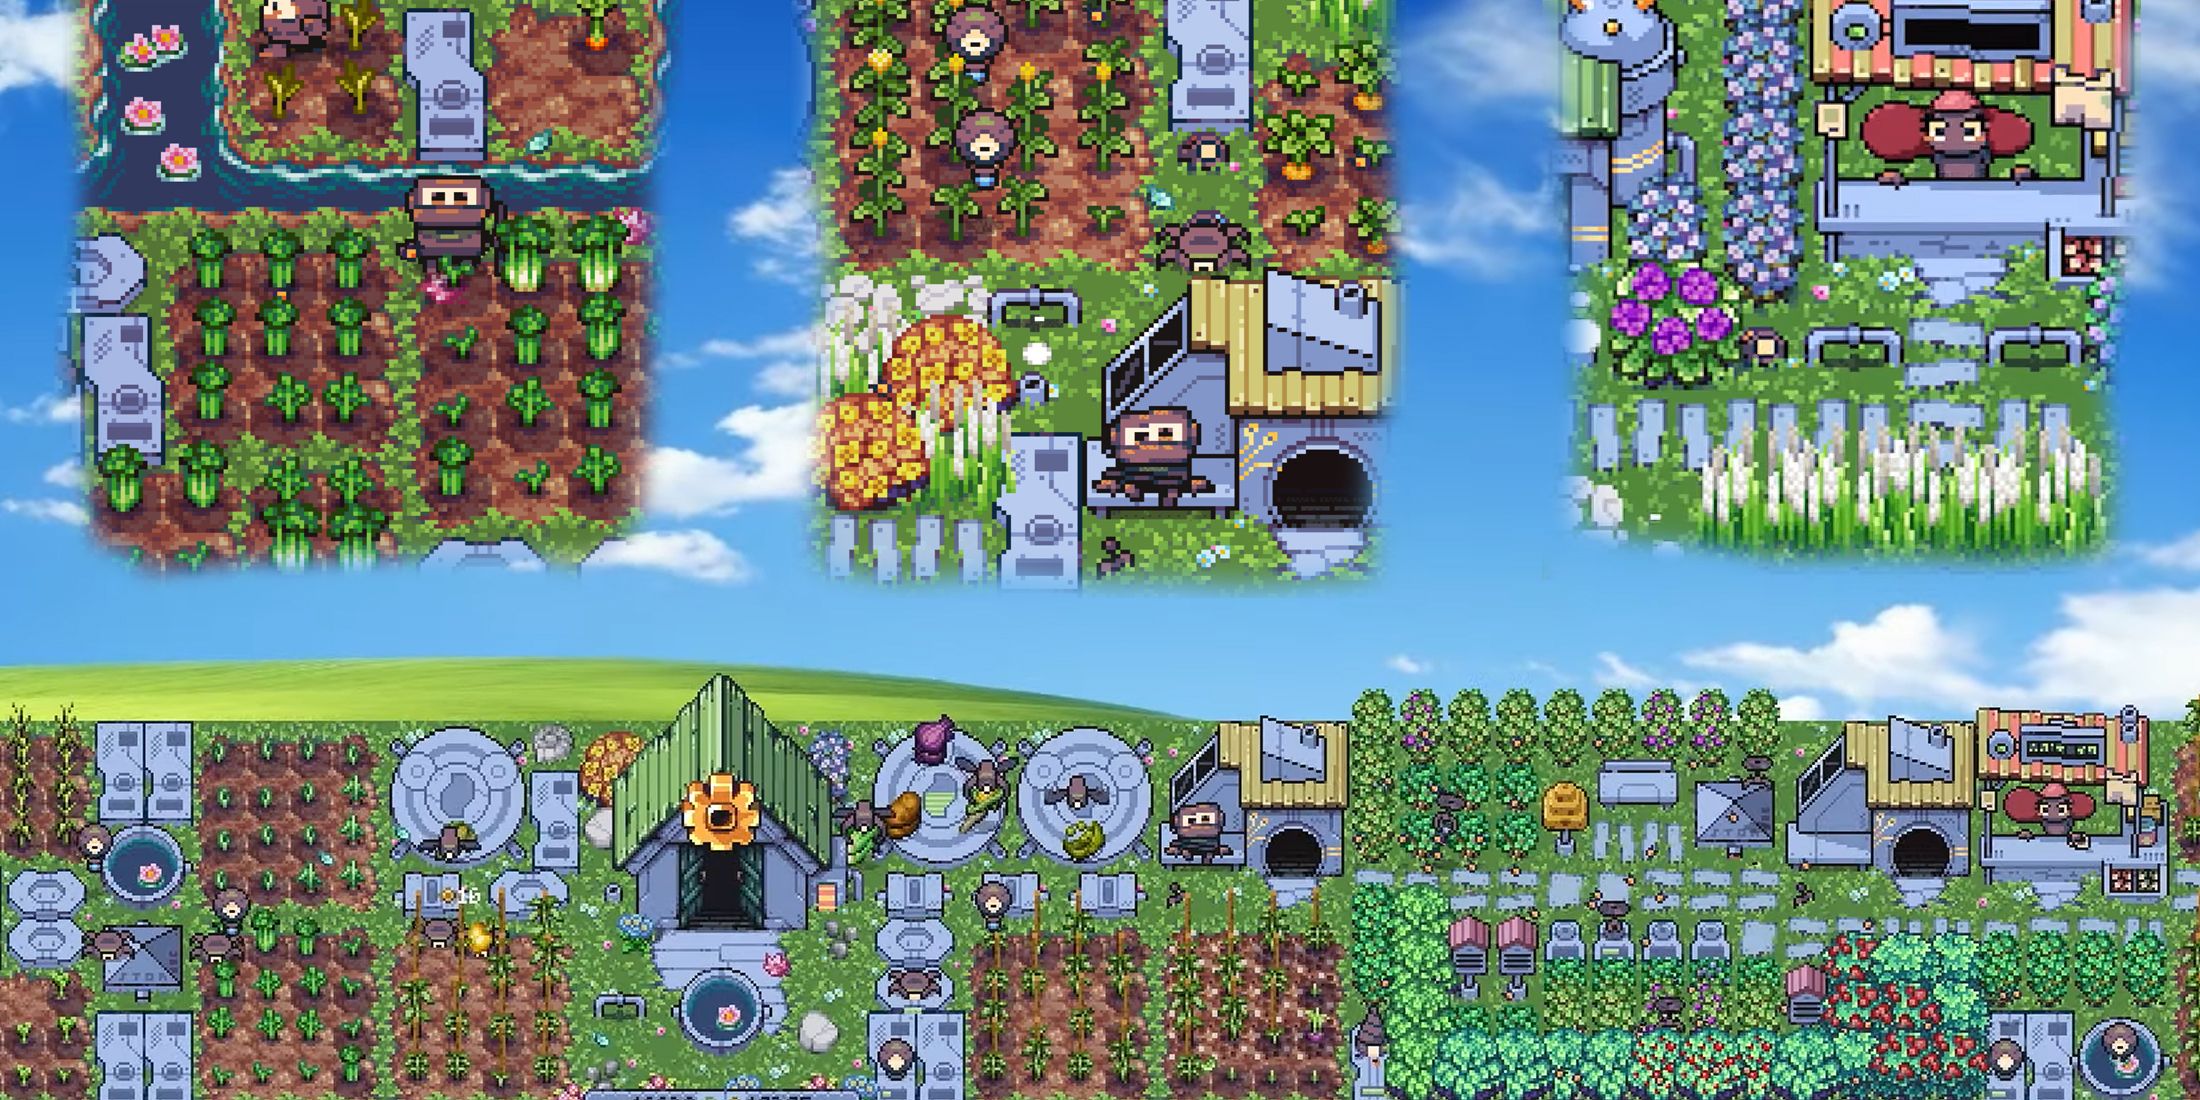 Rusty's Retirement desktop idler farming sim work while it plays productivity game